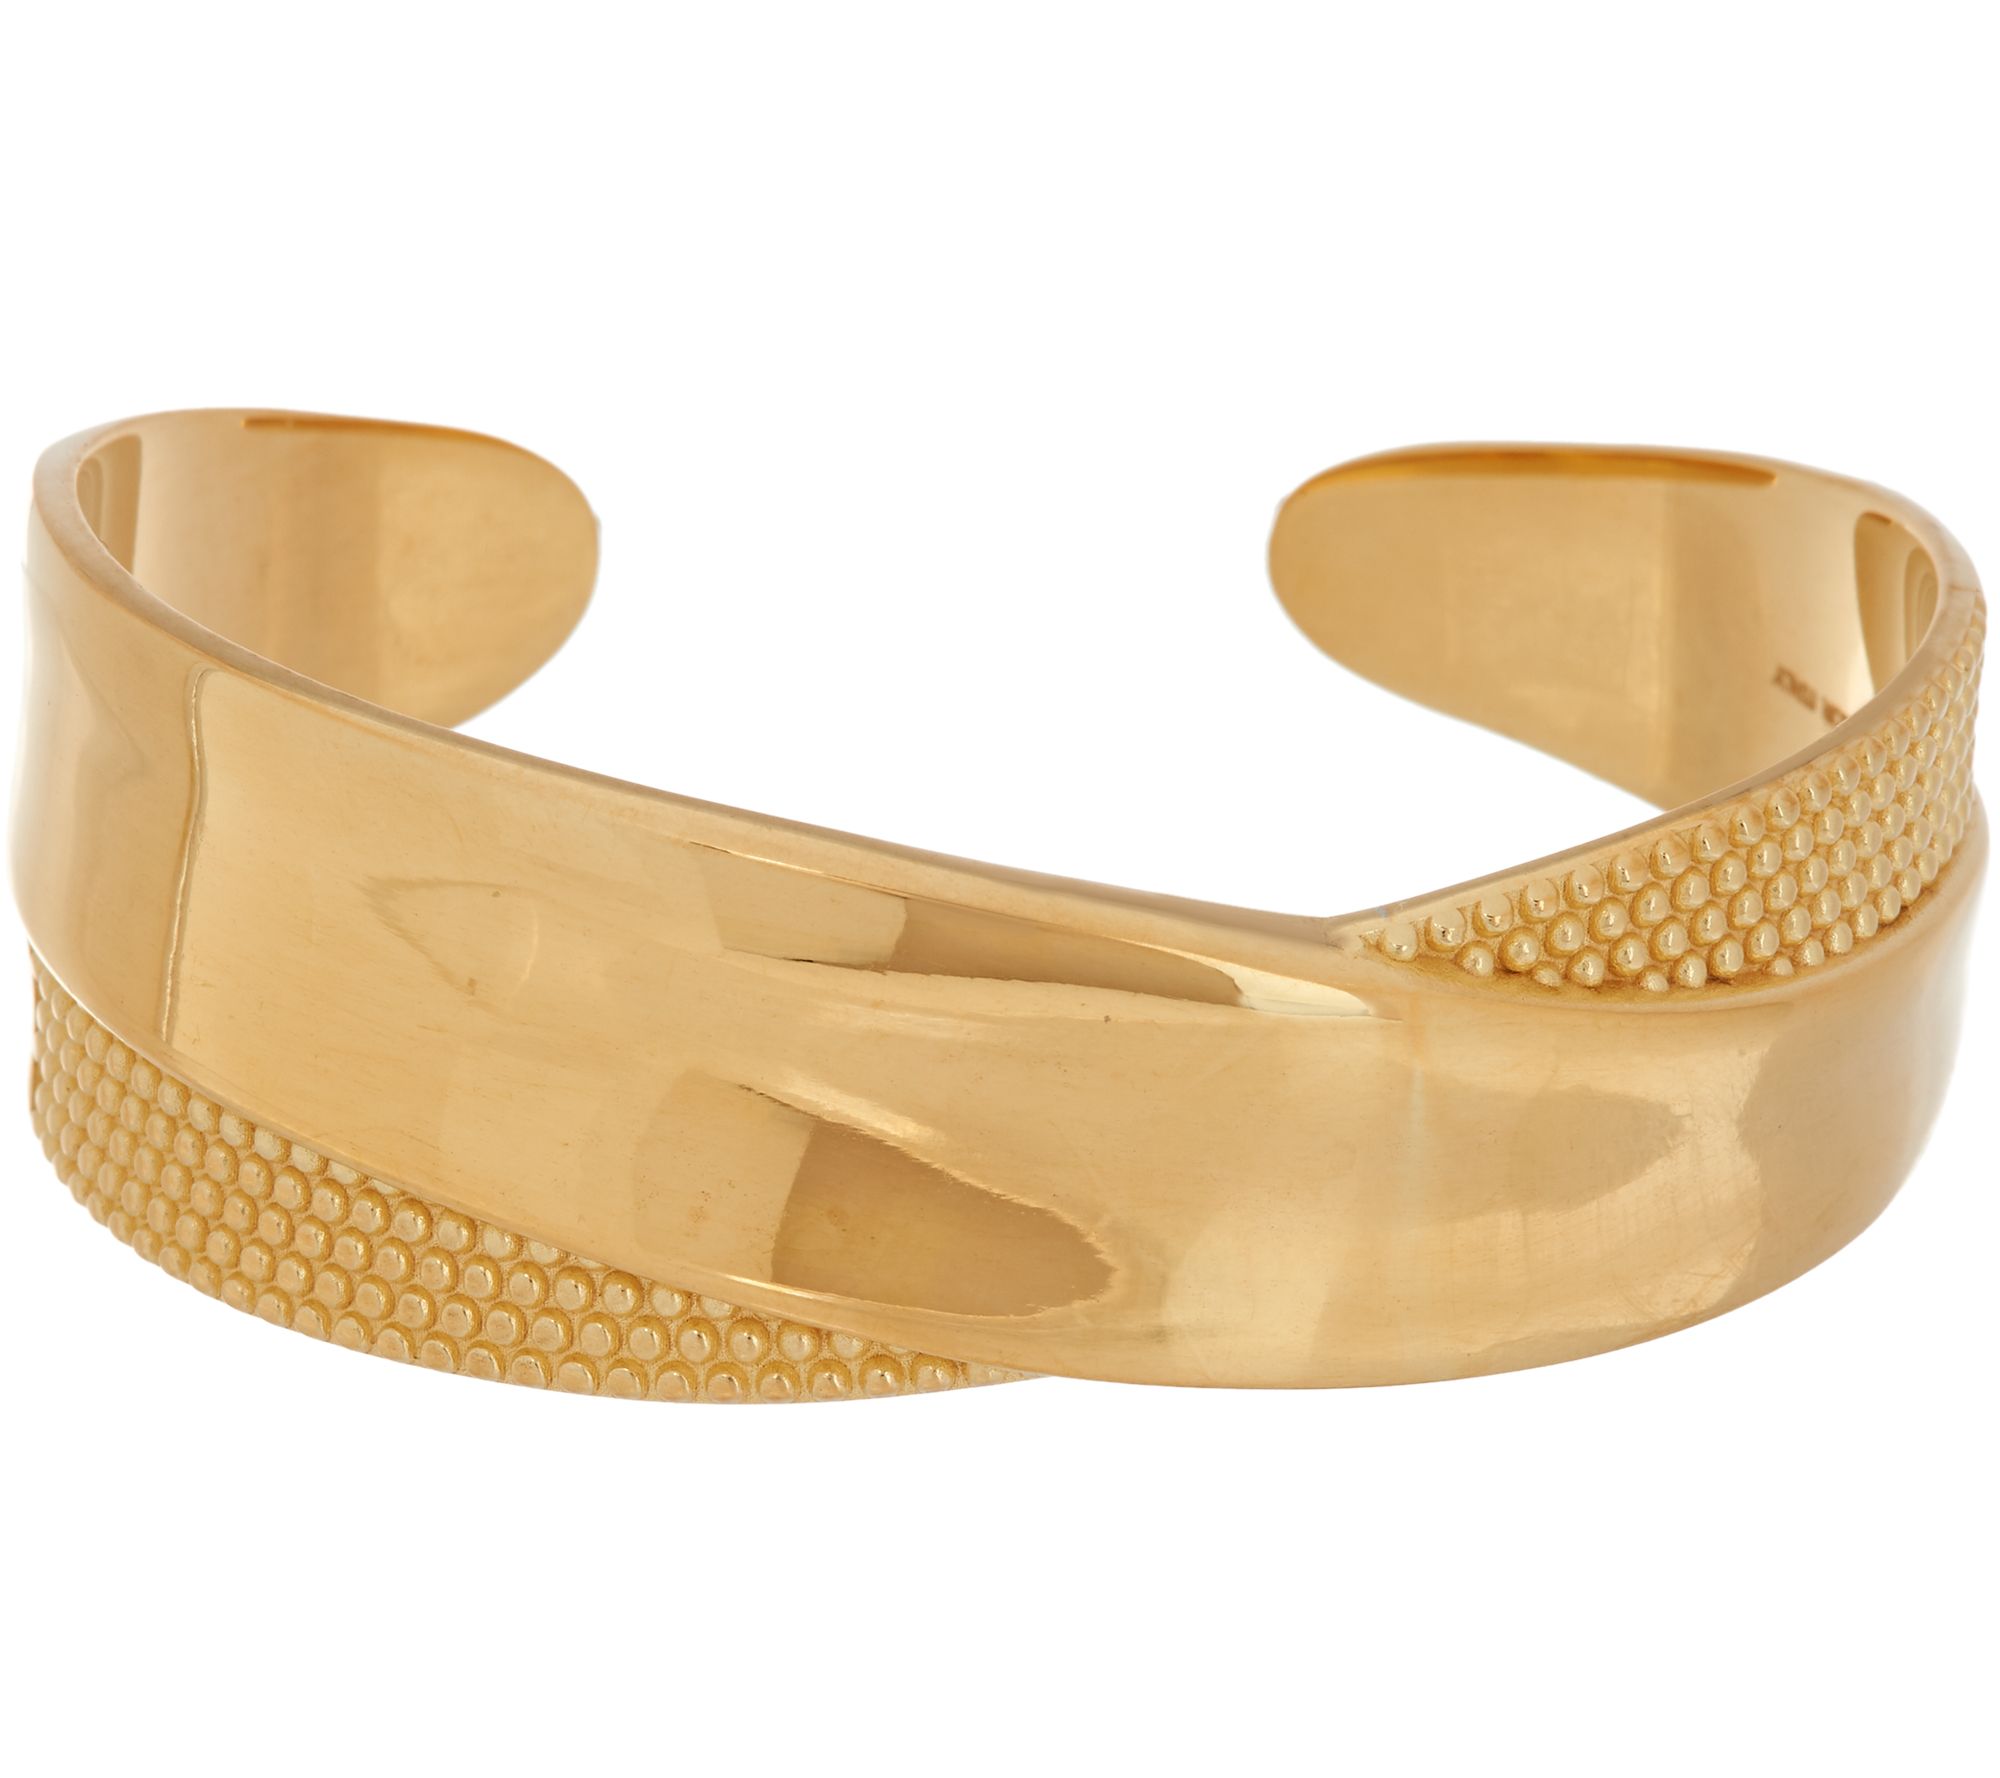 Bronzo Italia Polished and Textured X-Design Cuff Bracelet - QVC.com